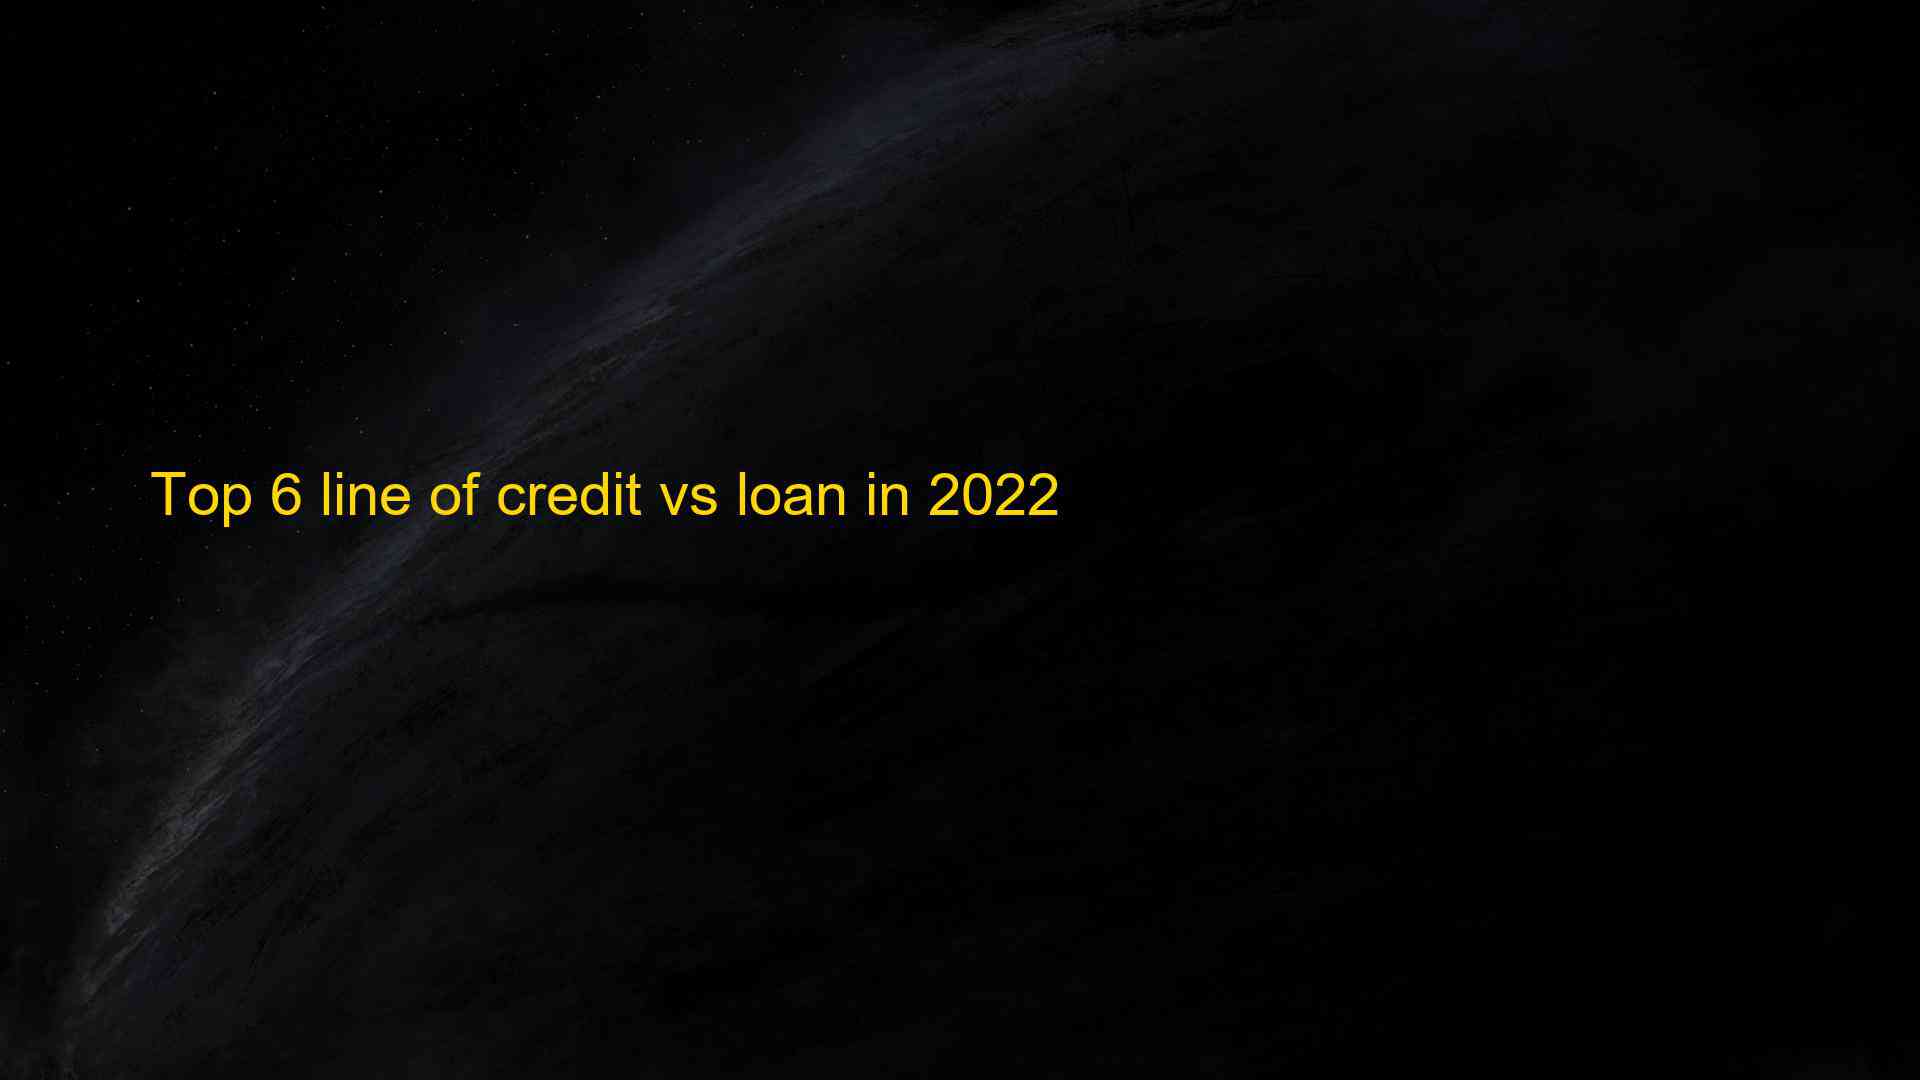 Top 6 line of credit vs loan in 2022 1660195206